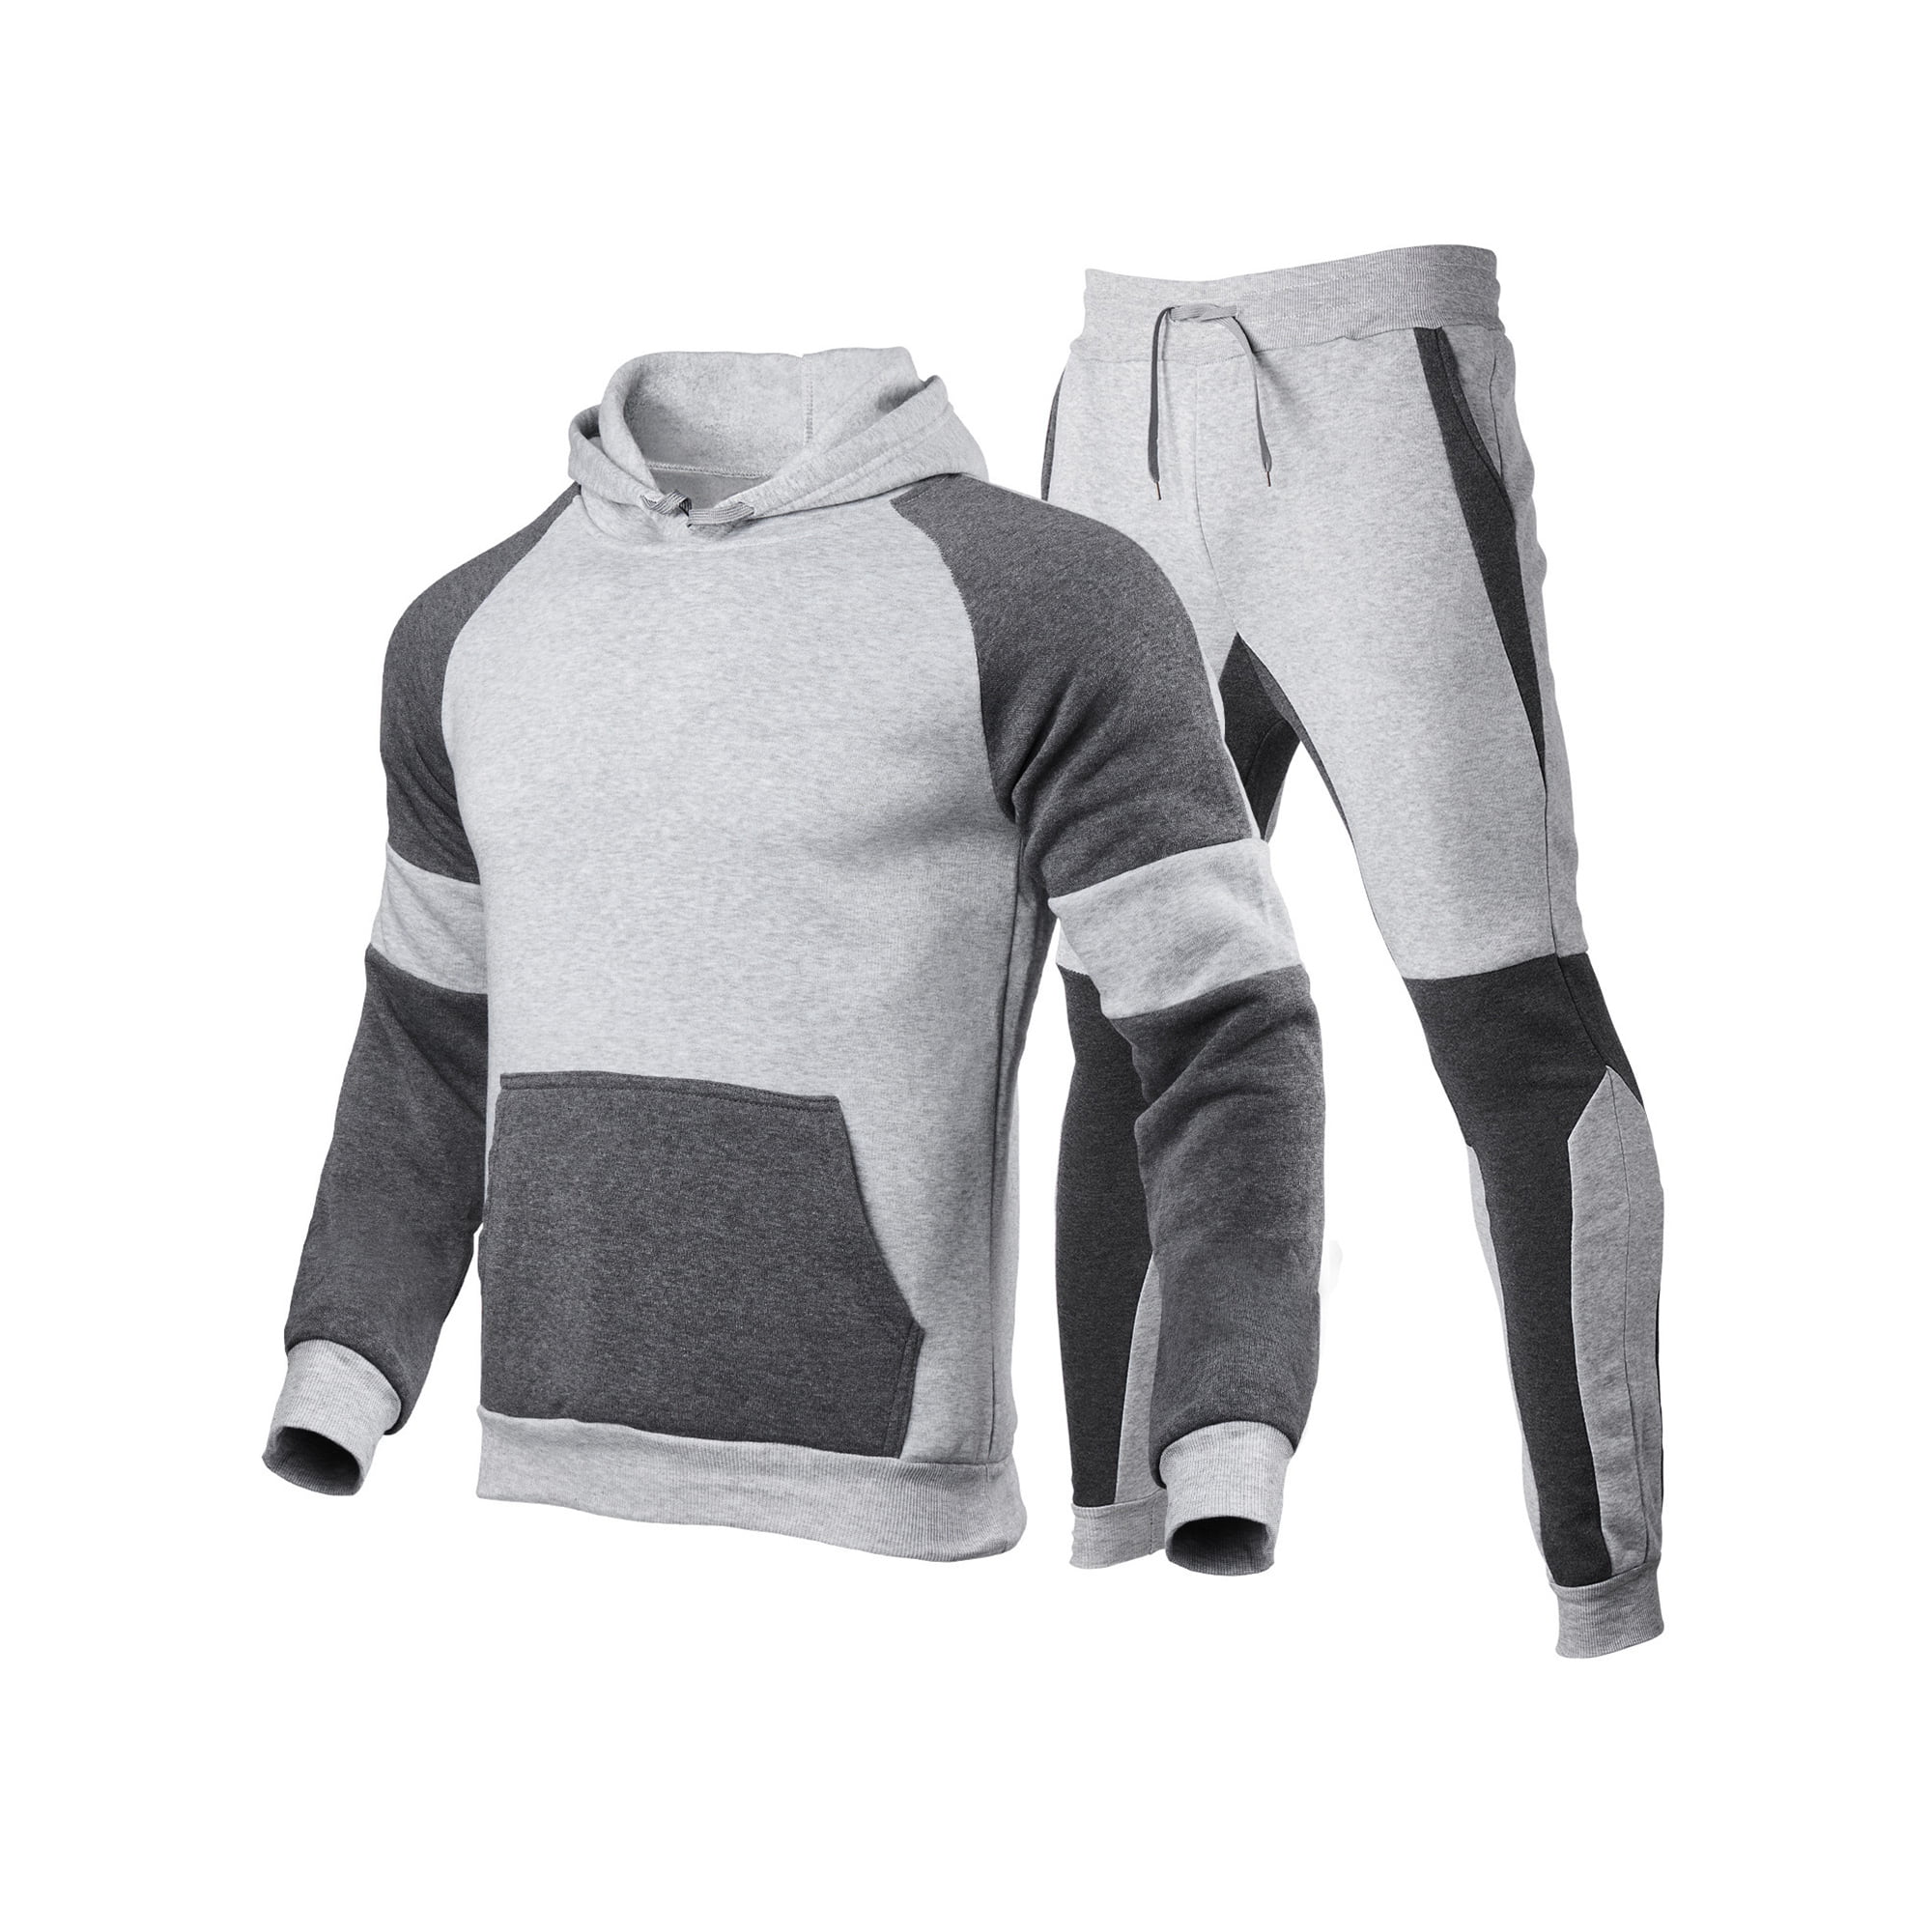 Men's Activewear by   Grey hoodie, Simple outfits, Grey